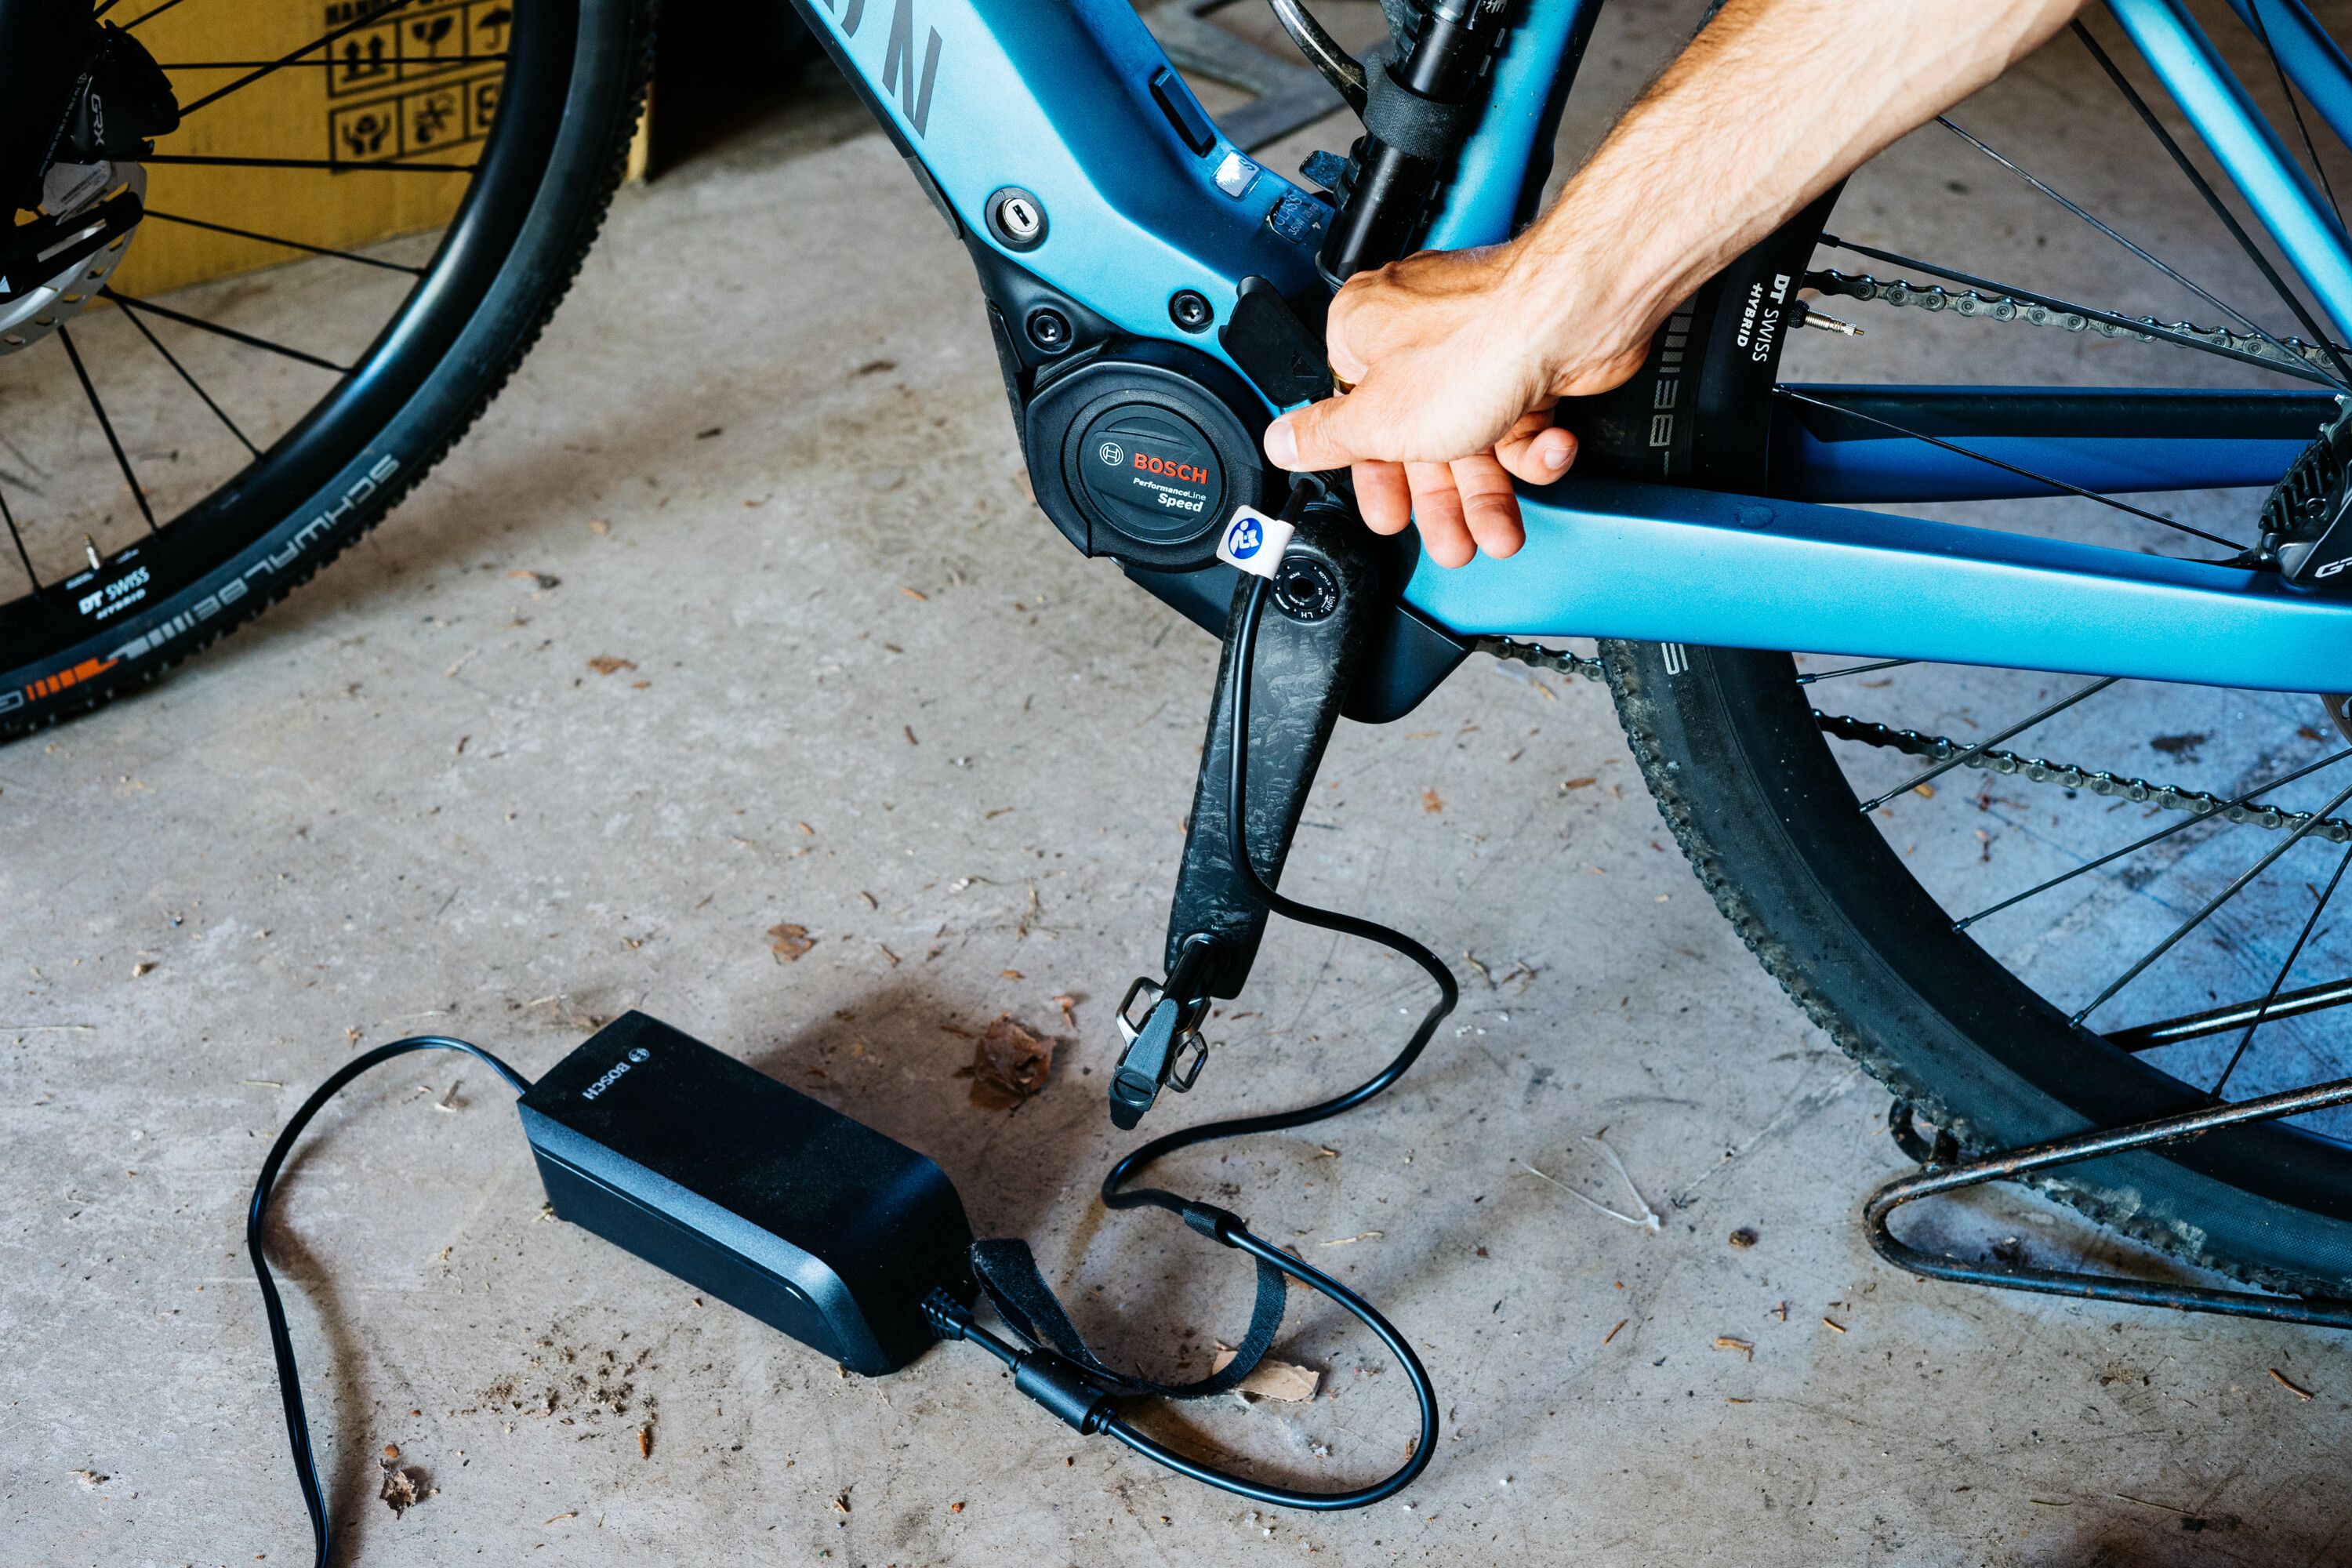 E-bike battery charger